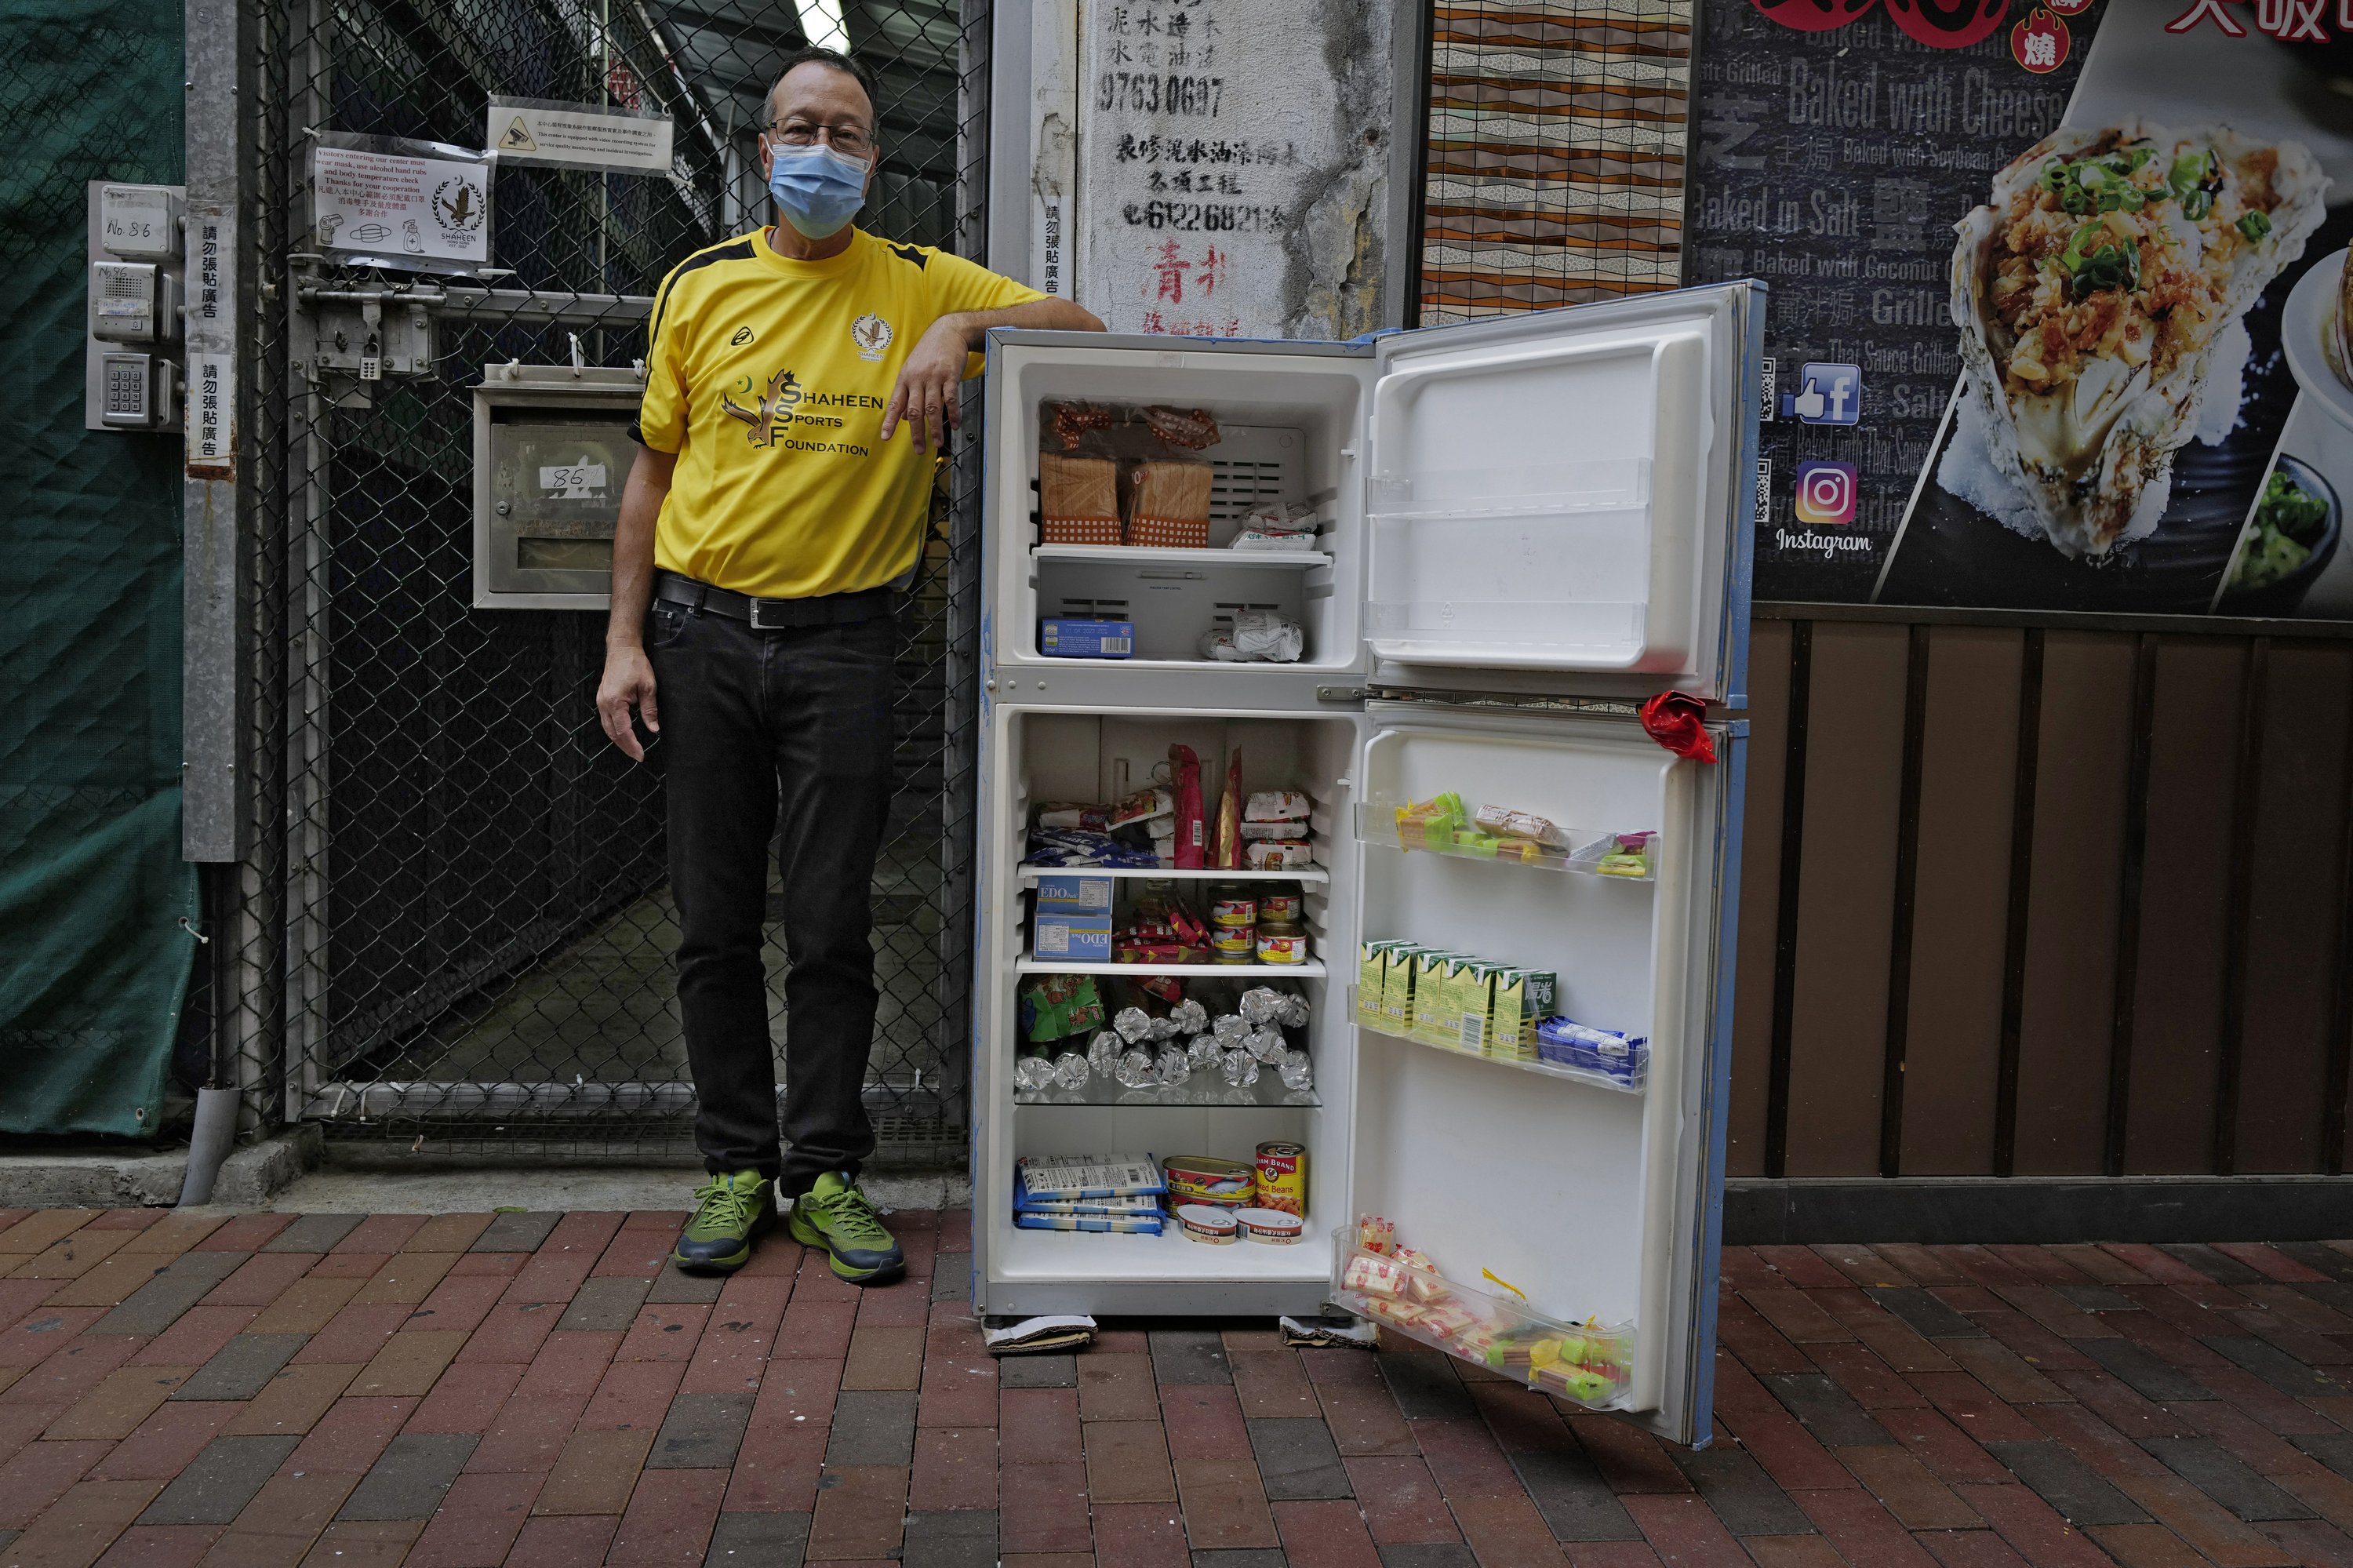 The Hong Kong street refrigerator keeps on giving